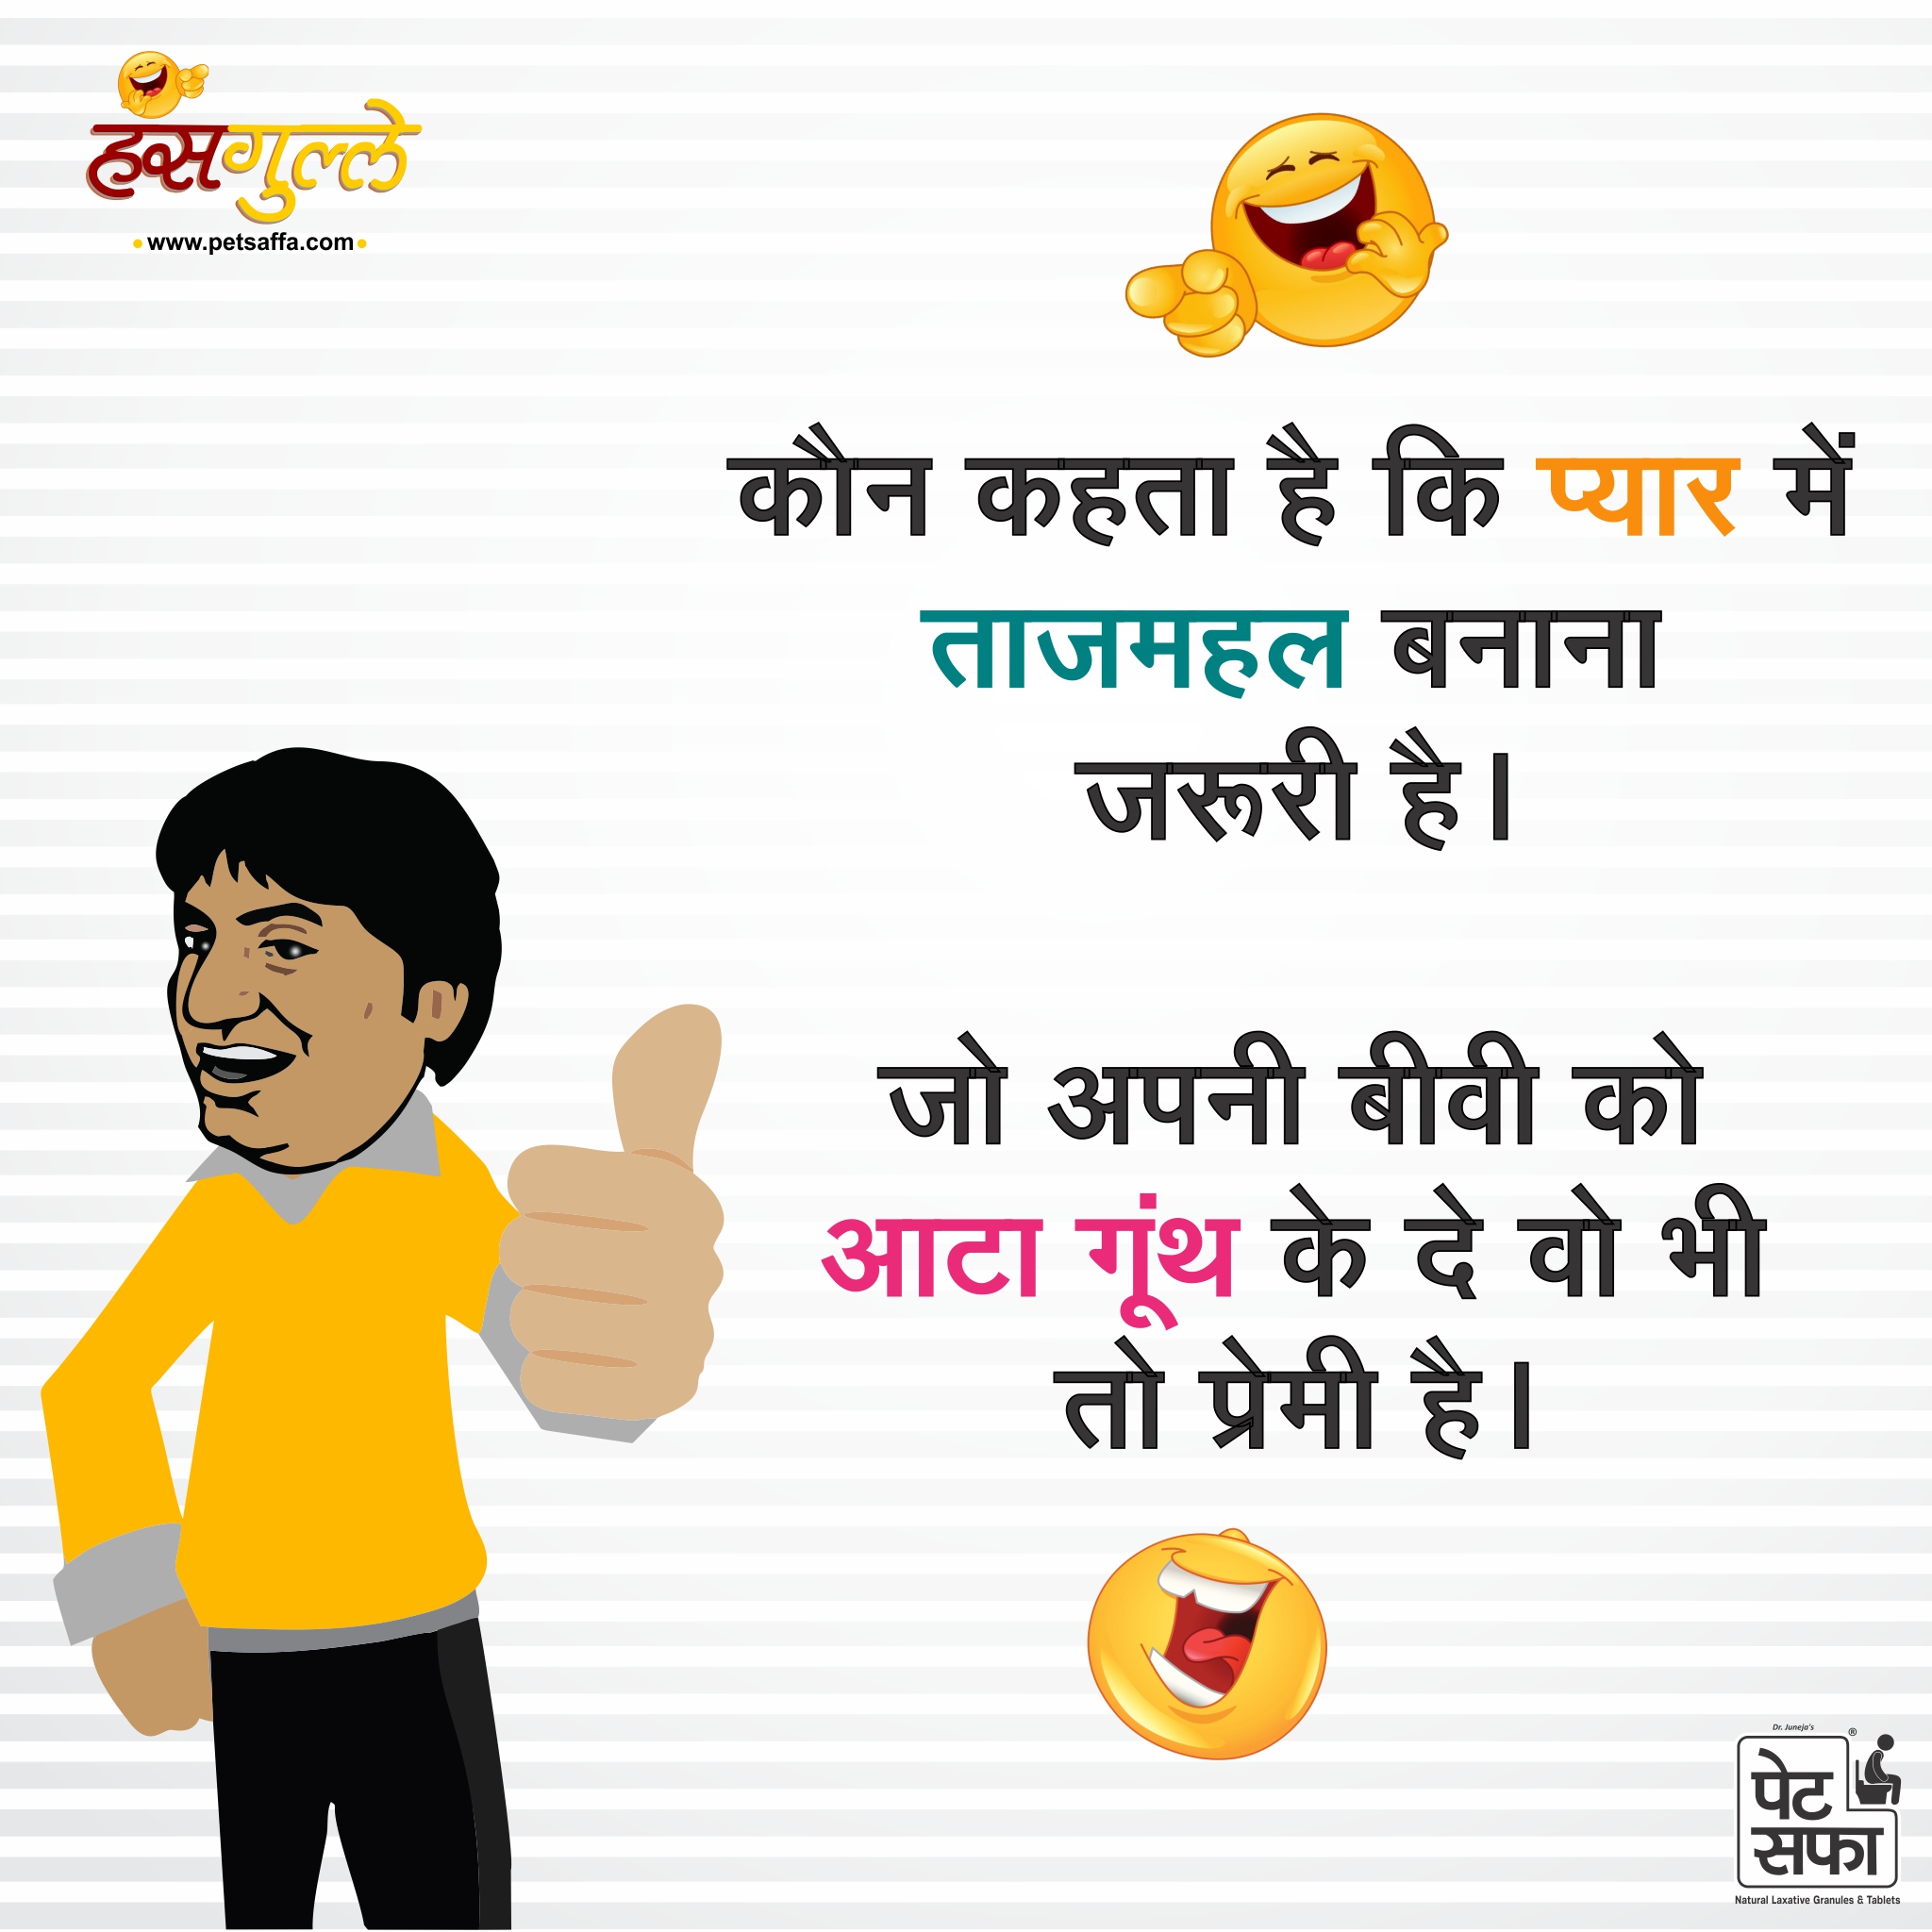 Top 10 Funny and Viral Jokes In Hindi on Social Media